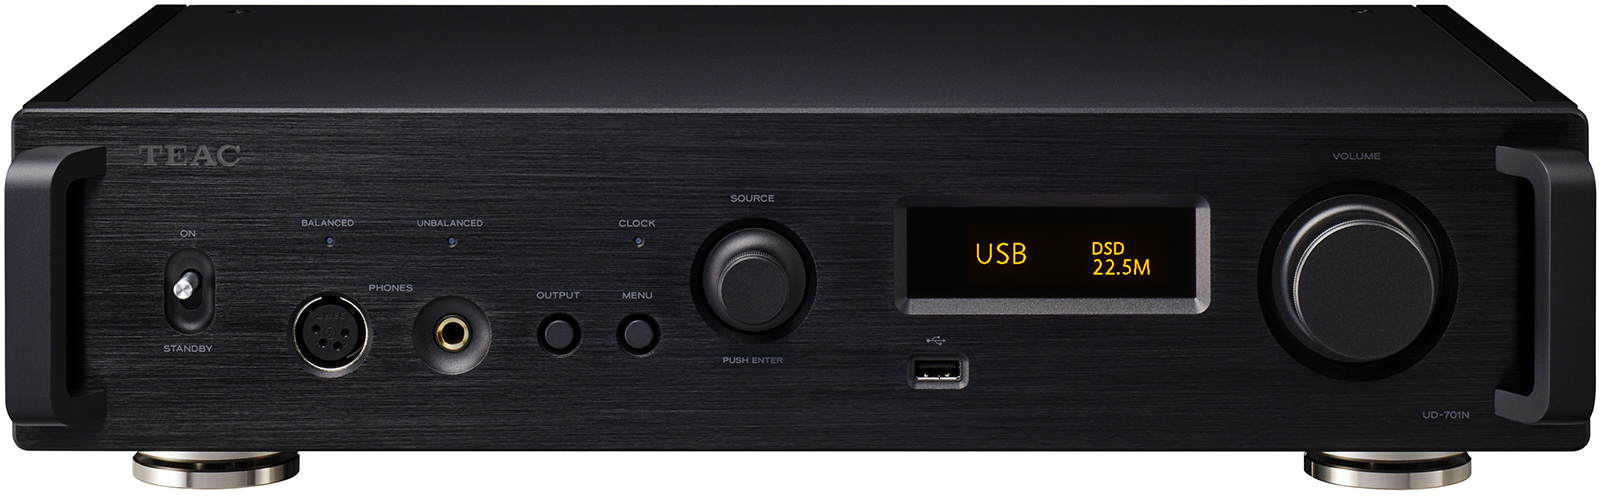 Сетевые аудио проигрыватели Teac UD-701N black сетевые аудио проигрыватели teac ud 701n silver